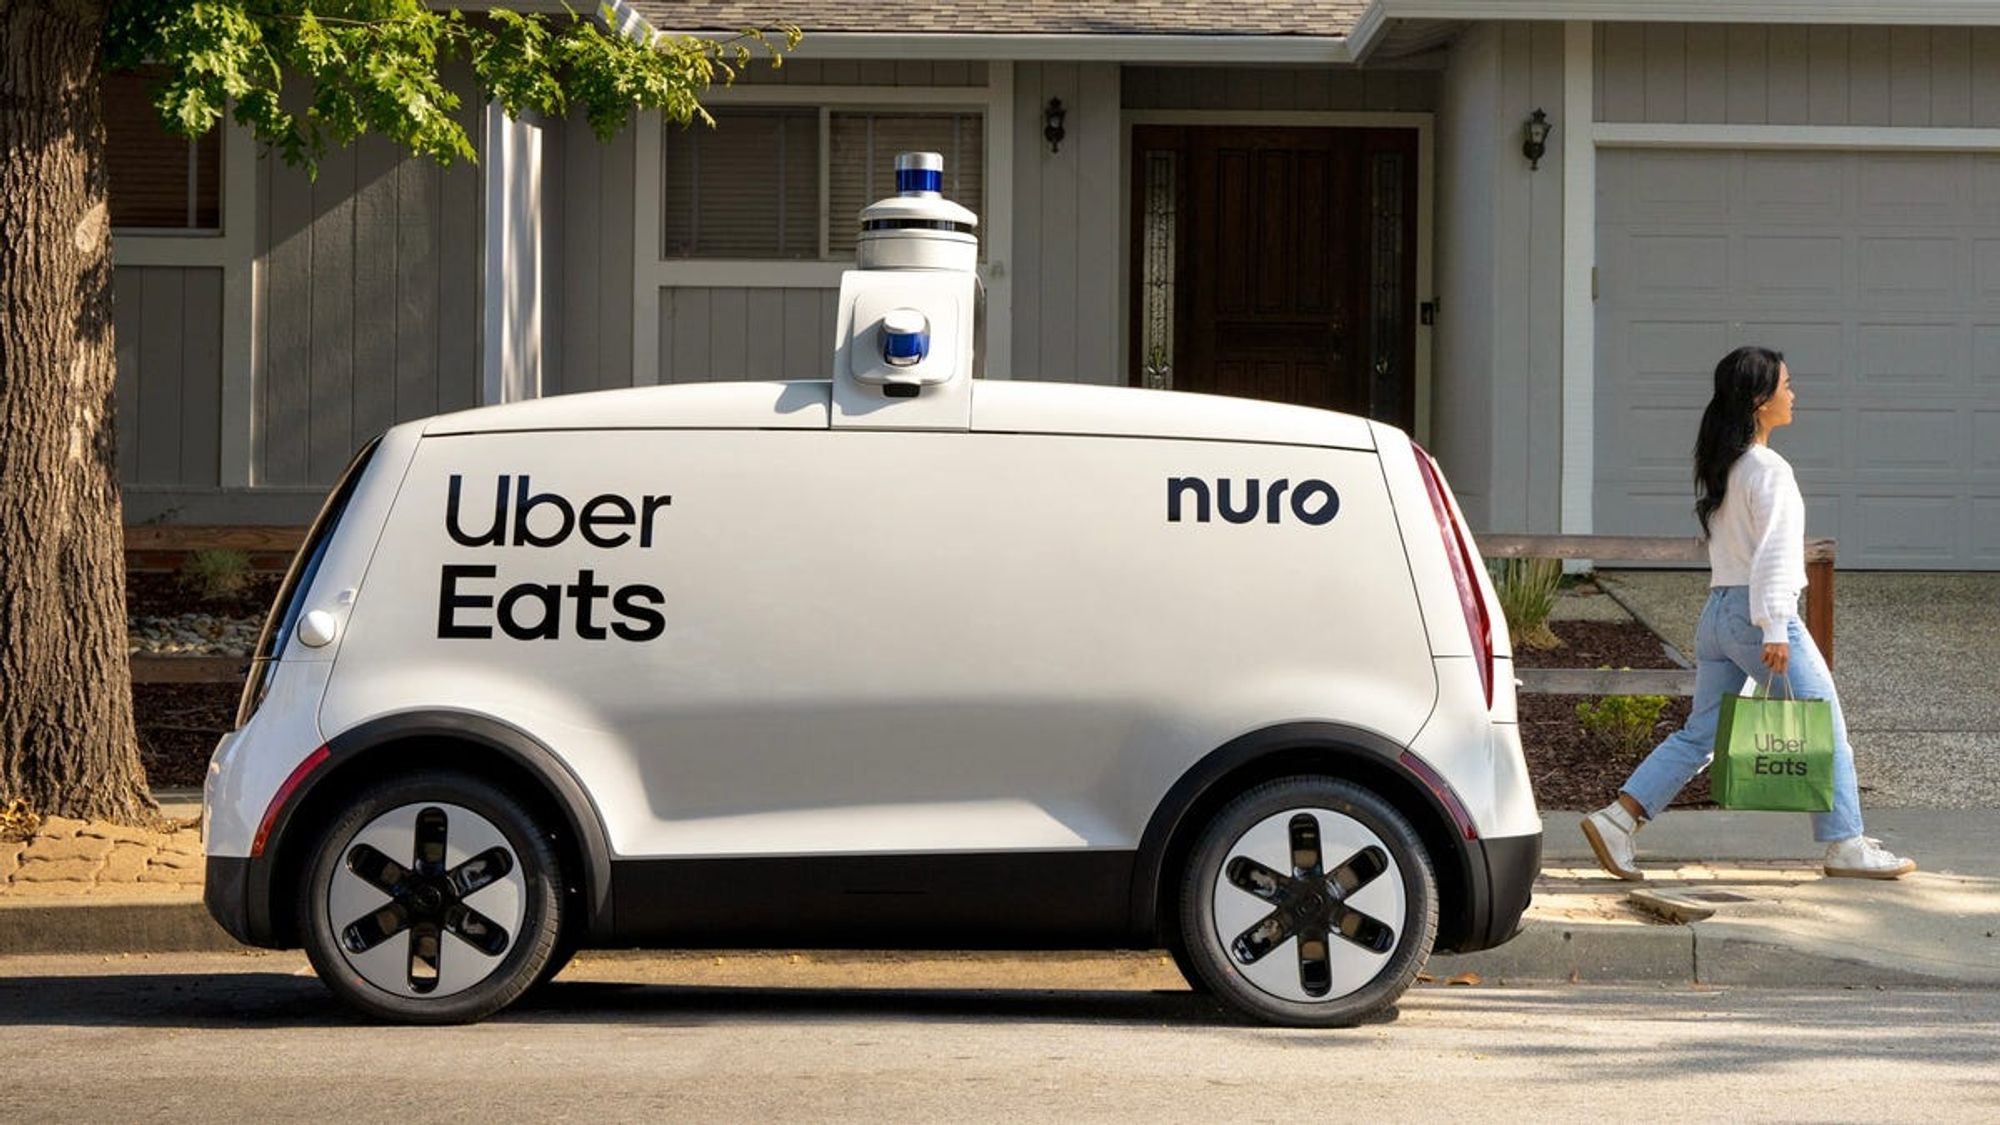 Uber Eats to Use Autonomous Electric Vehicles for Deliveries - CNET